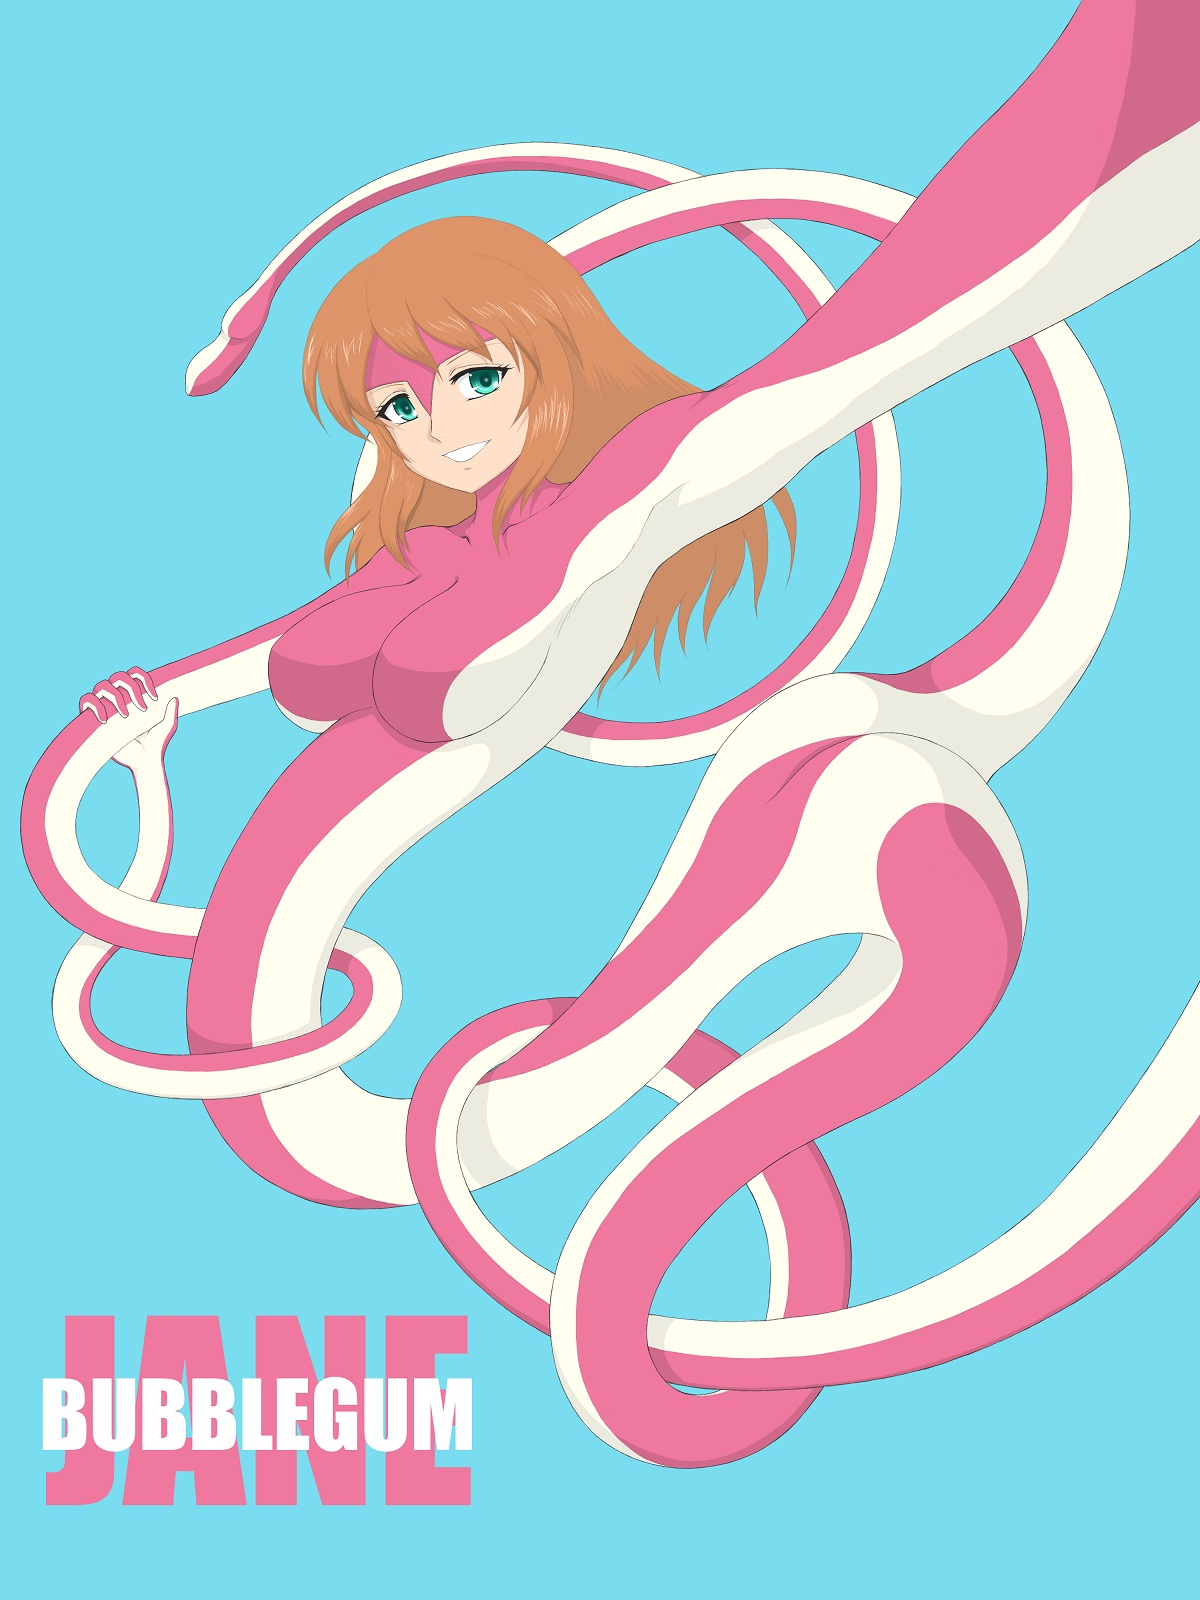 Bubblegum jane anime-style by yooi on DeviantArt.